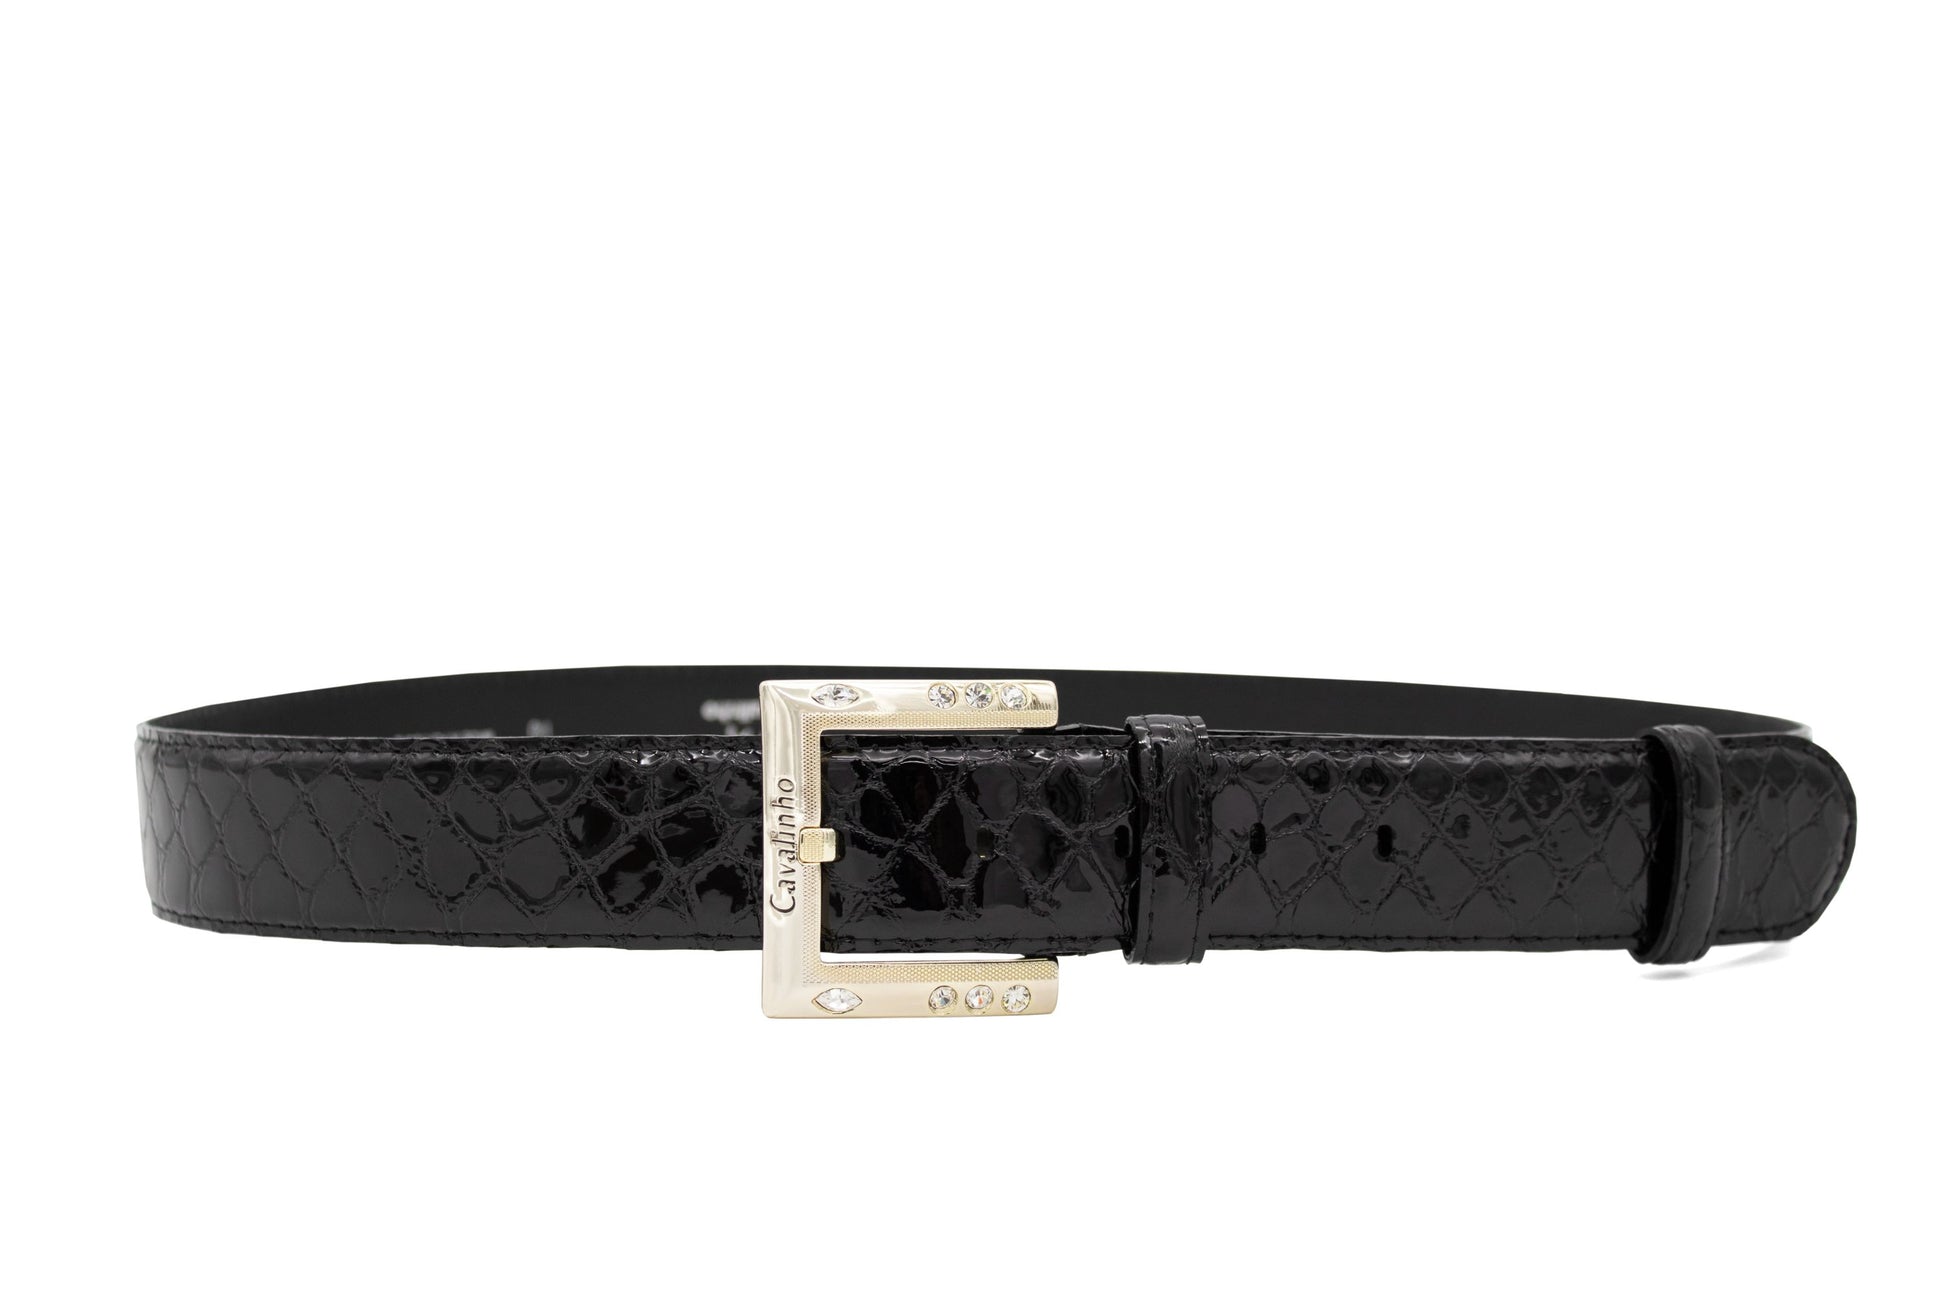 Cavalinho Gallop Patent Leather Belt - Black Gold - 58010810.01_1